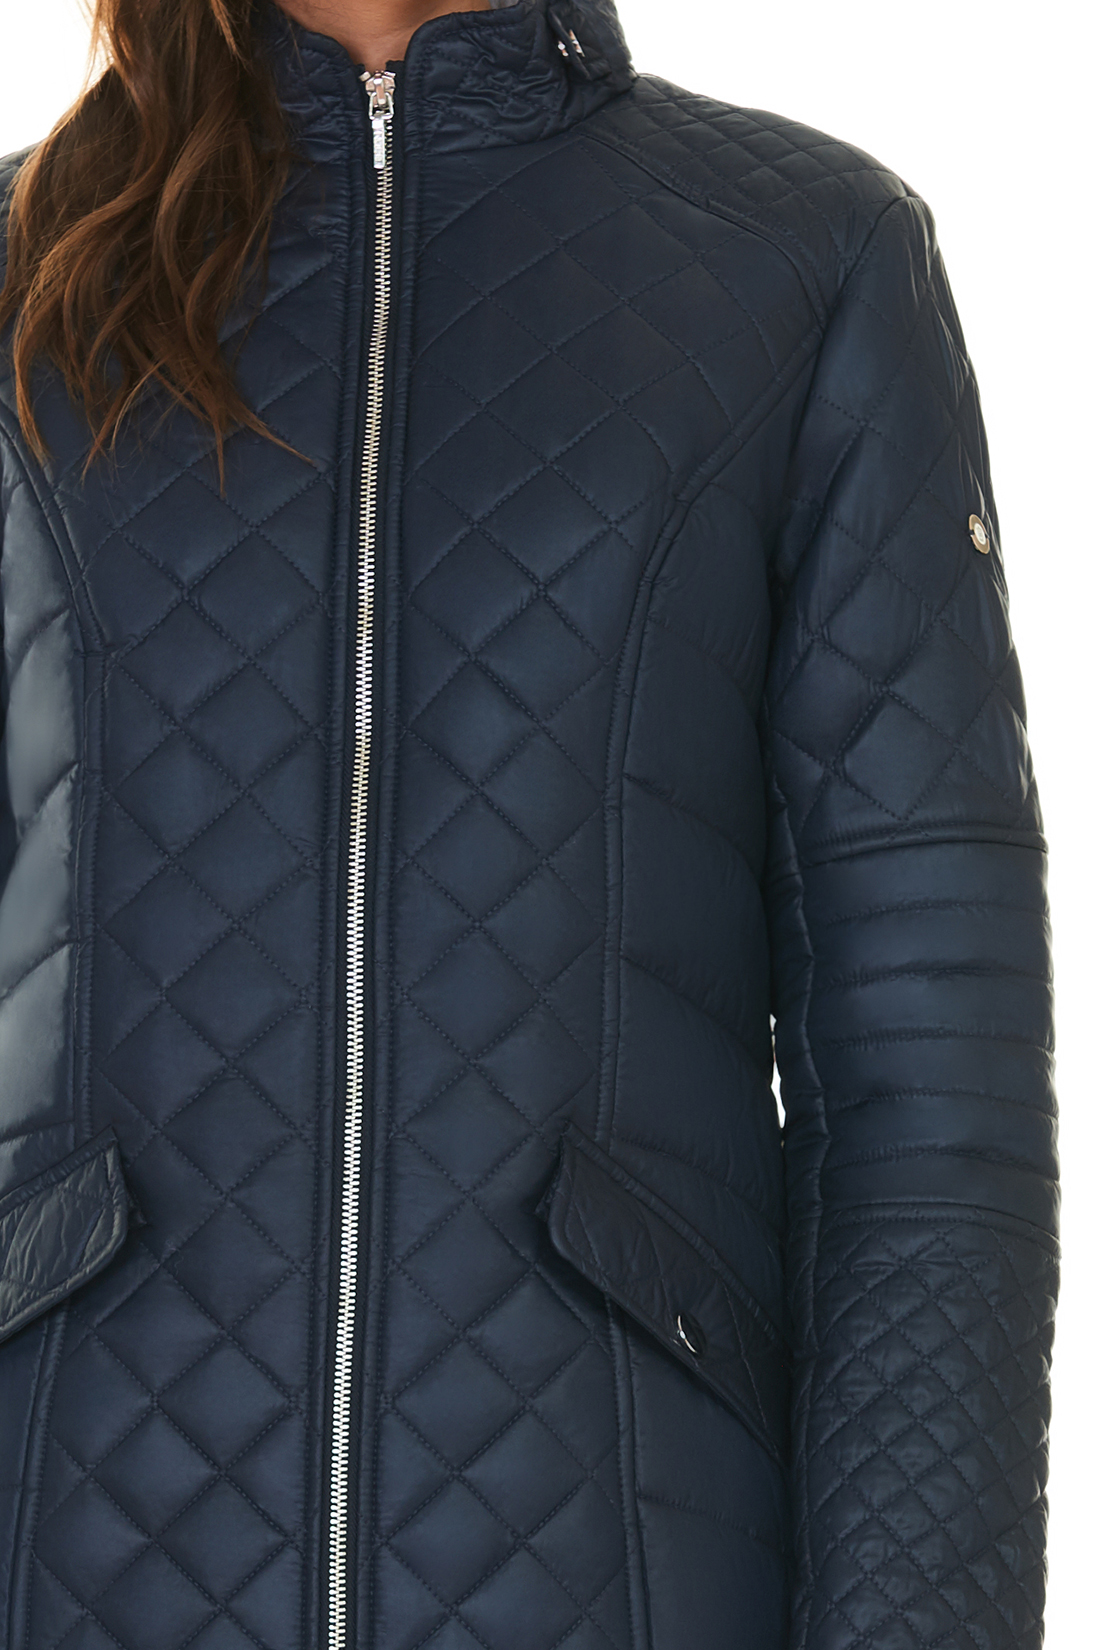 Удлинённая стёганая куртка (арт. baon B037535), размер XL, цвет синий Удлинённая стёганая куртка (арт. baon B037535) - фото 4